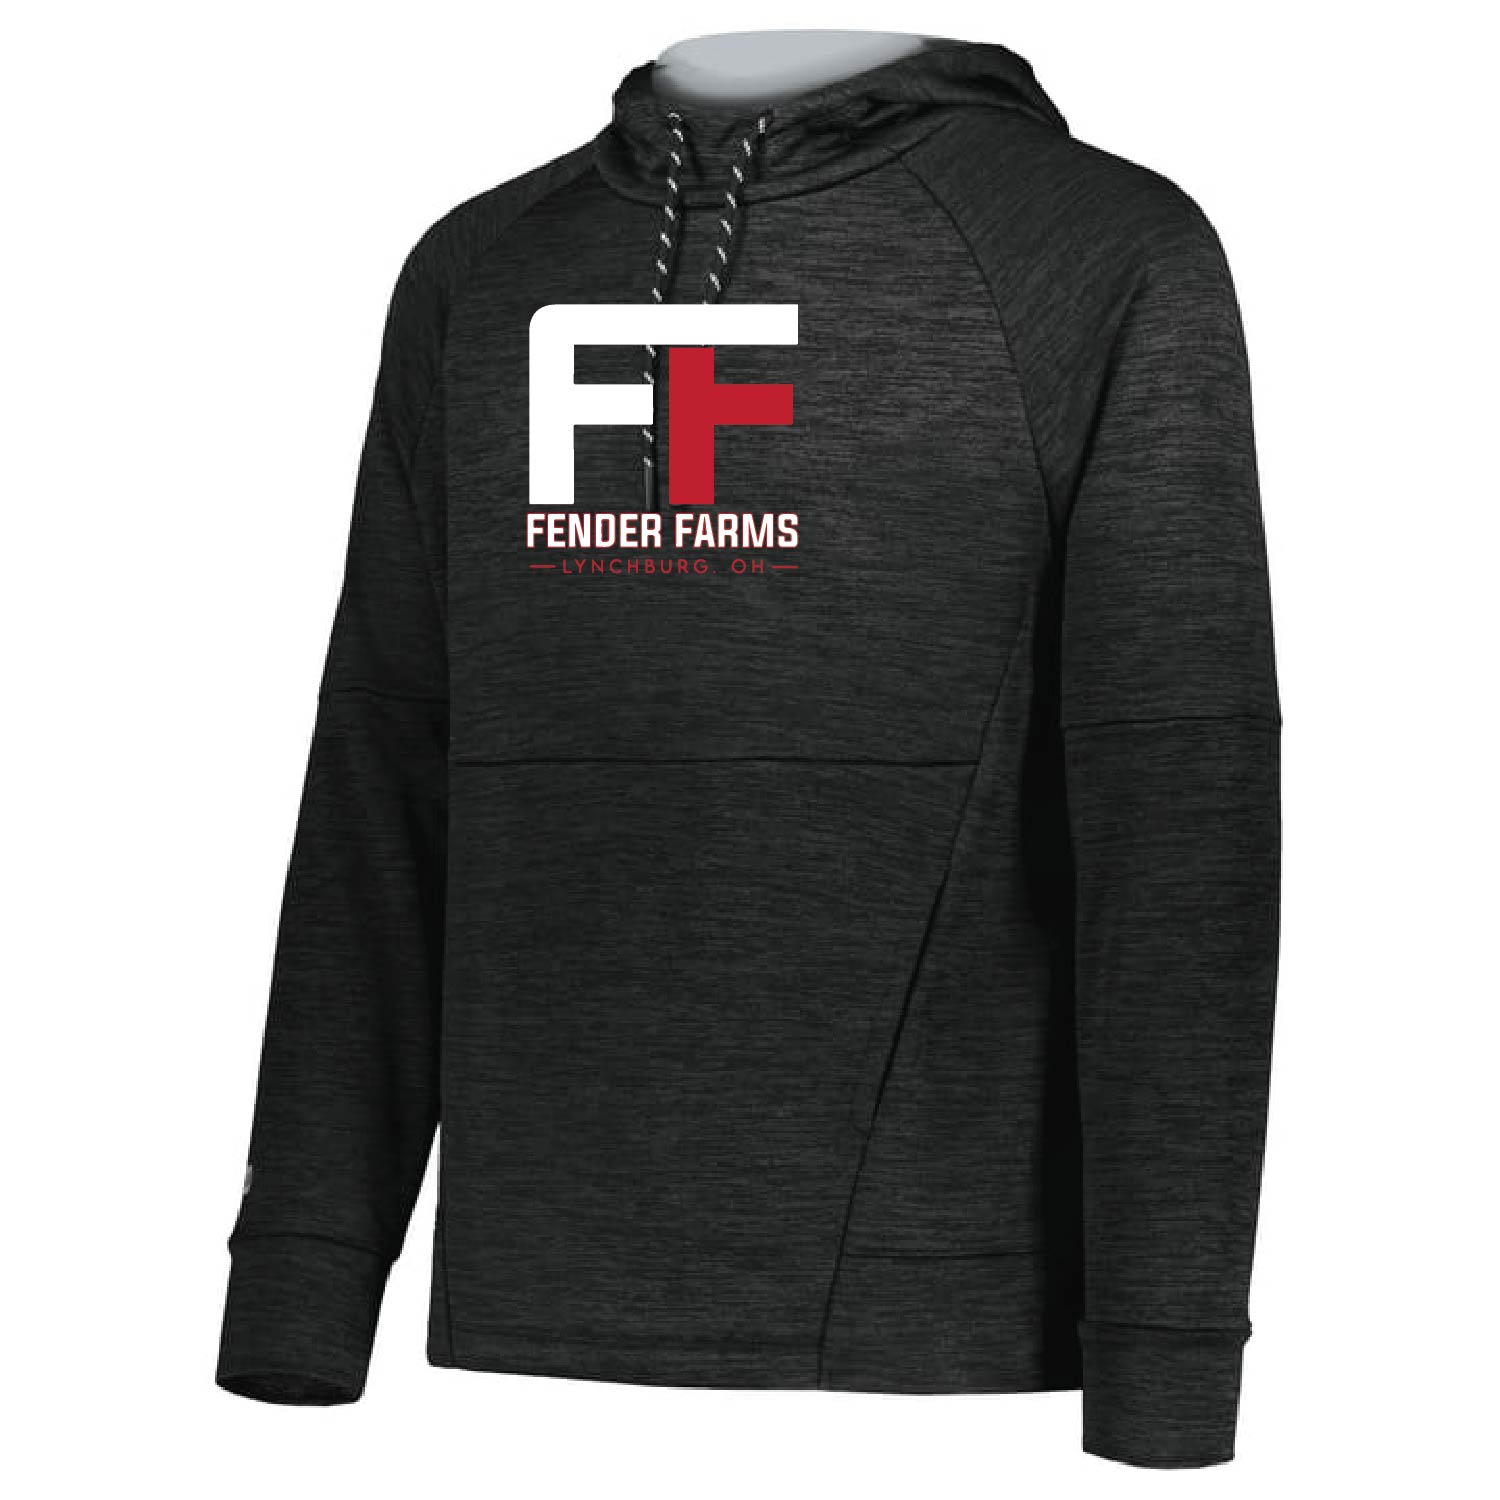 Fender Farms Sweatshirts